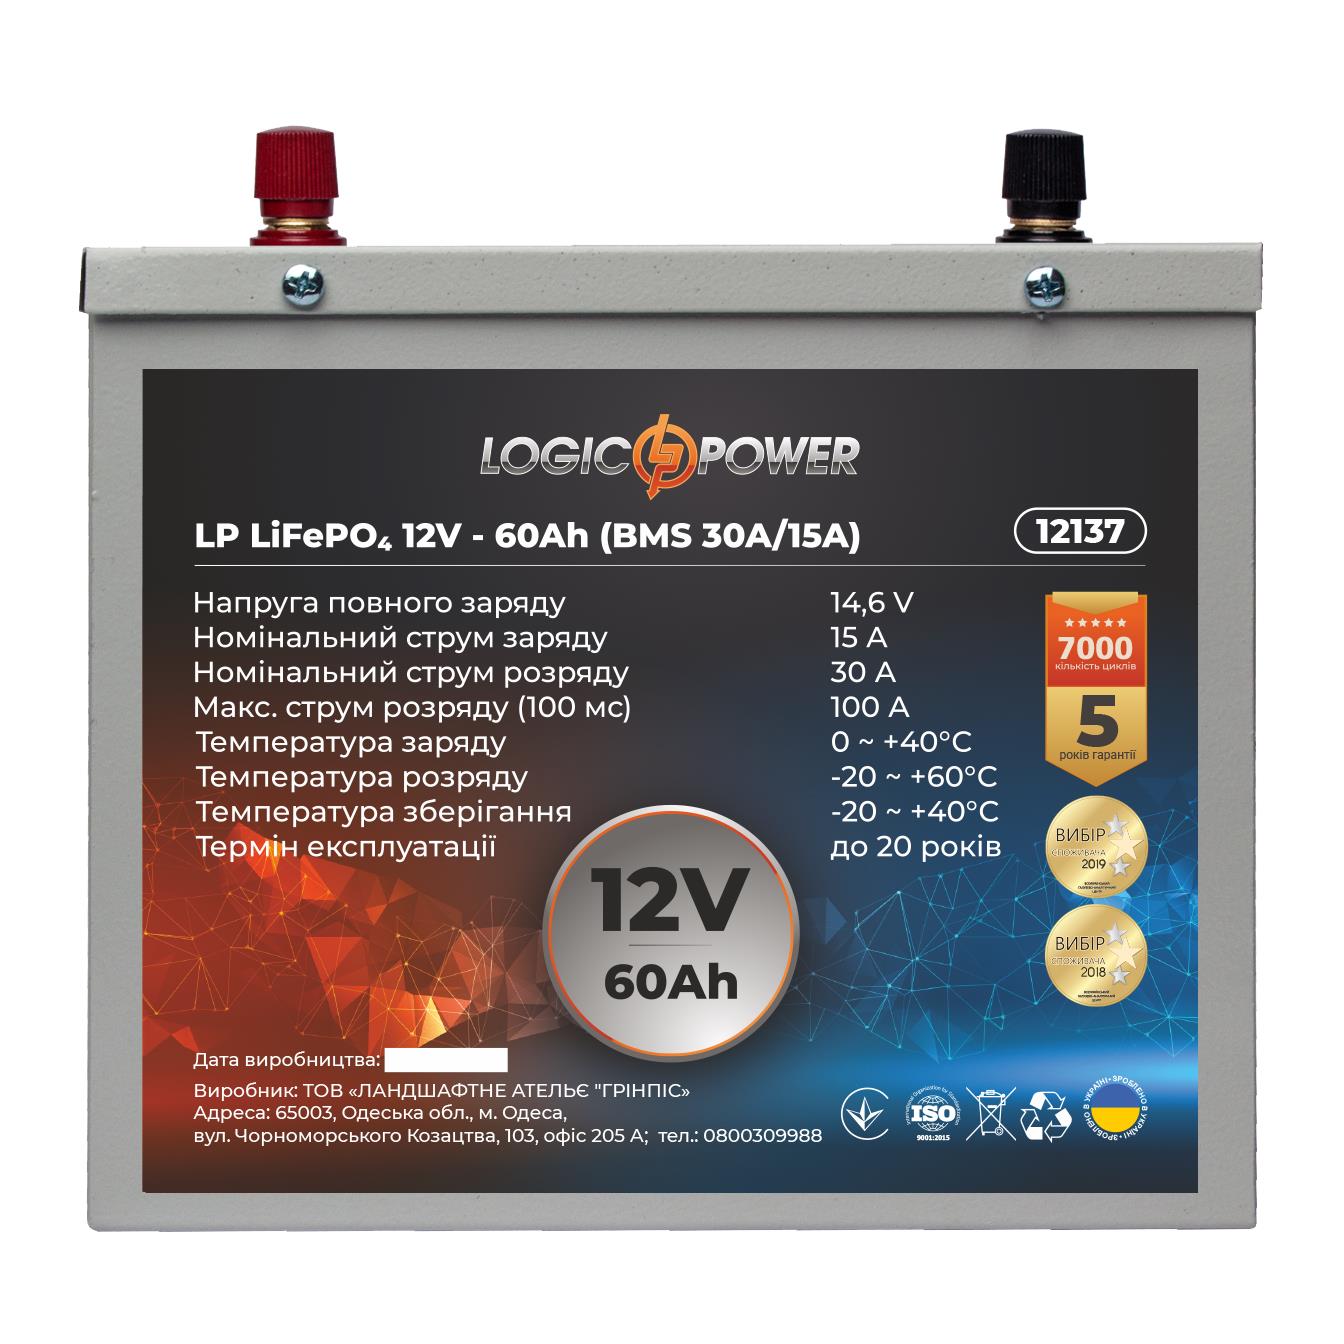 LogicPower LP LiFePO4 12V - 60 Ah (BMS 30A/15A) металл (12137)